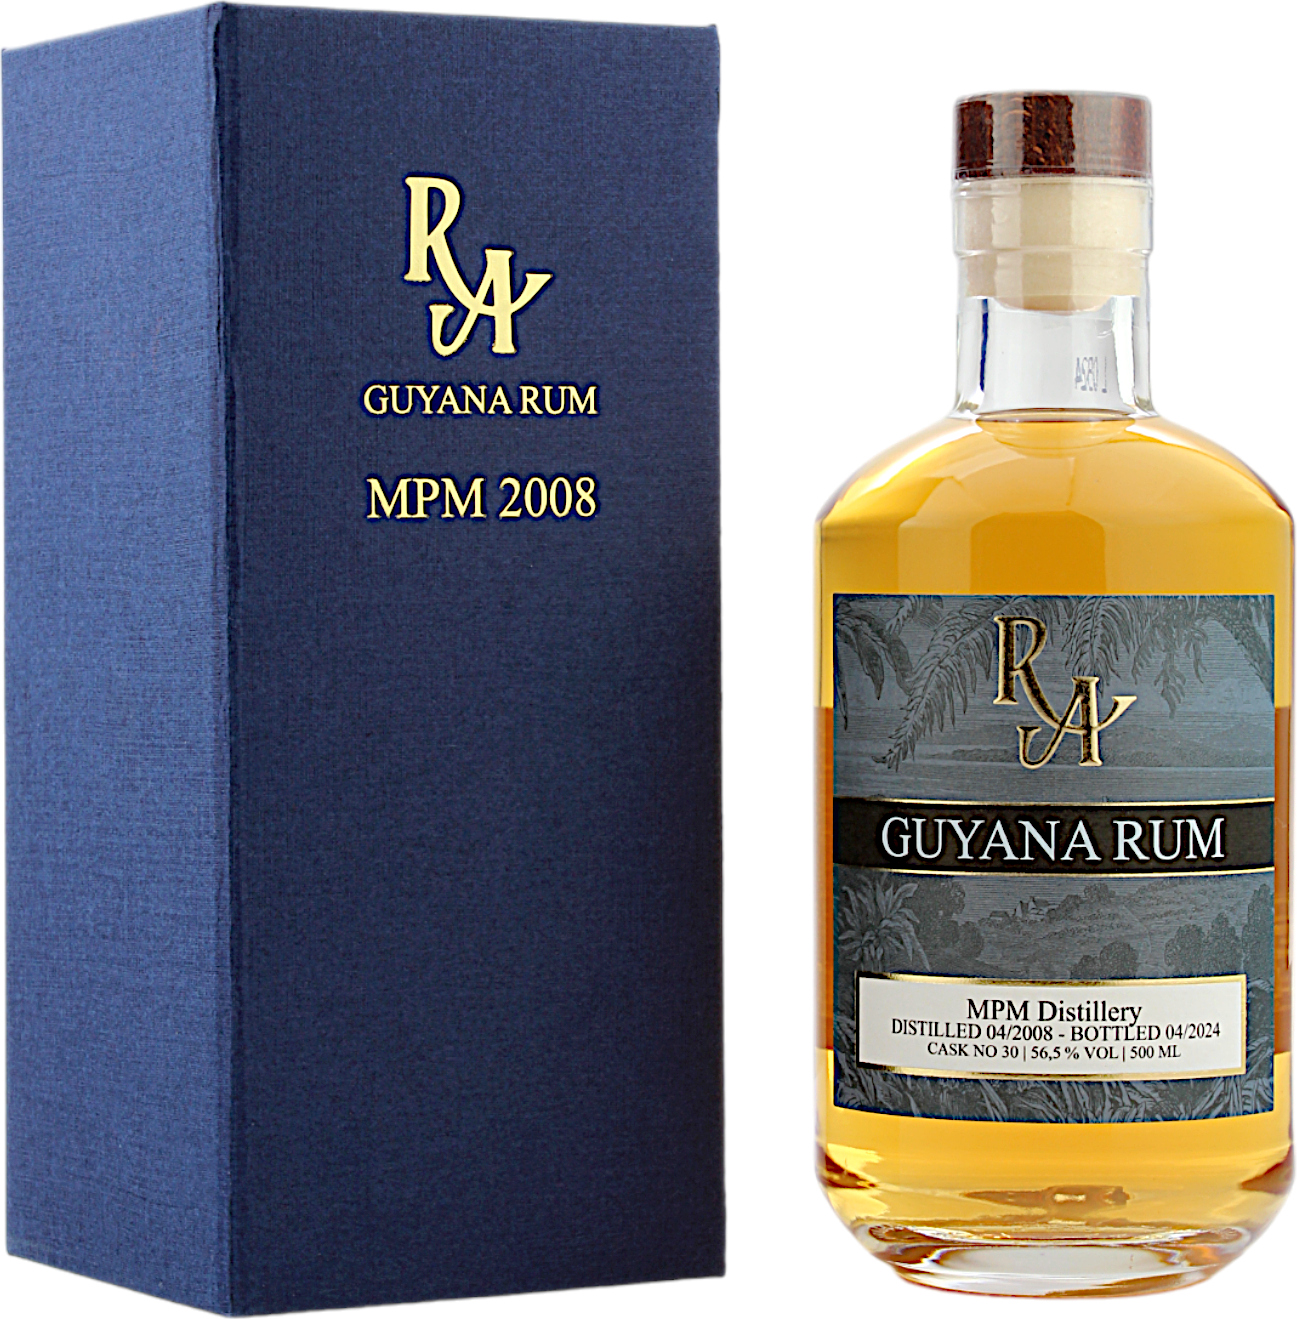 Rum Artesanal Guyana Rum 16 Jahre 2008/2024 56.5% 0,5l